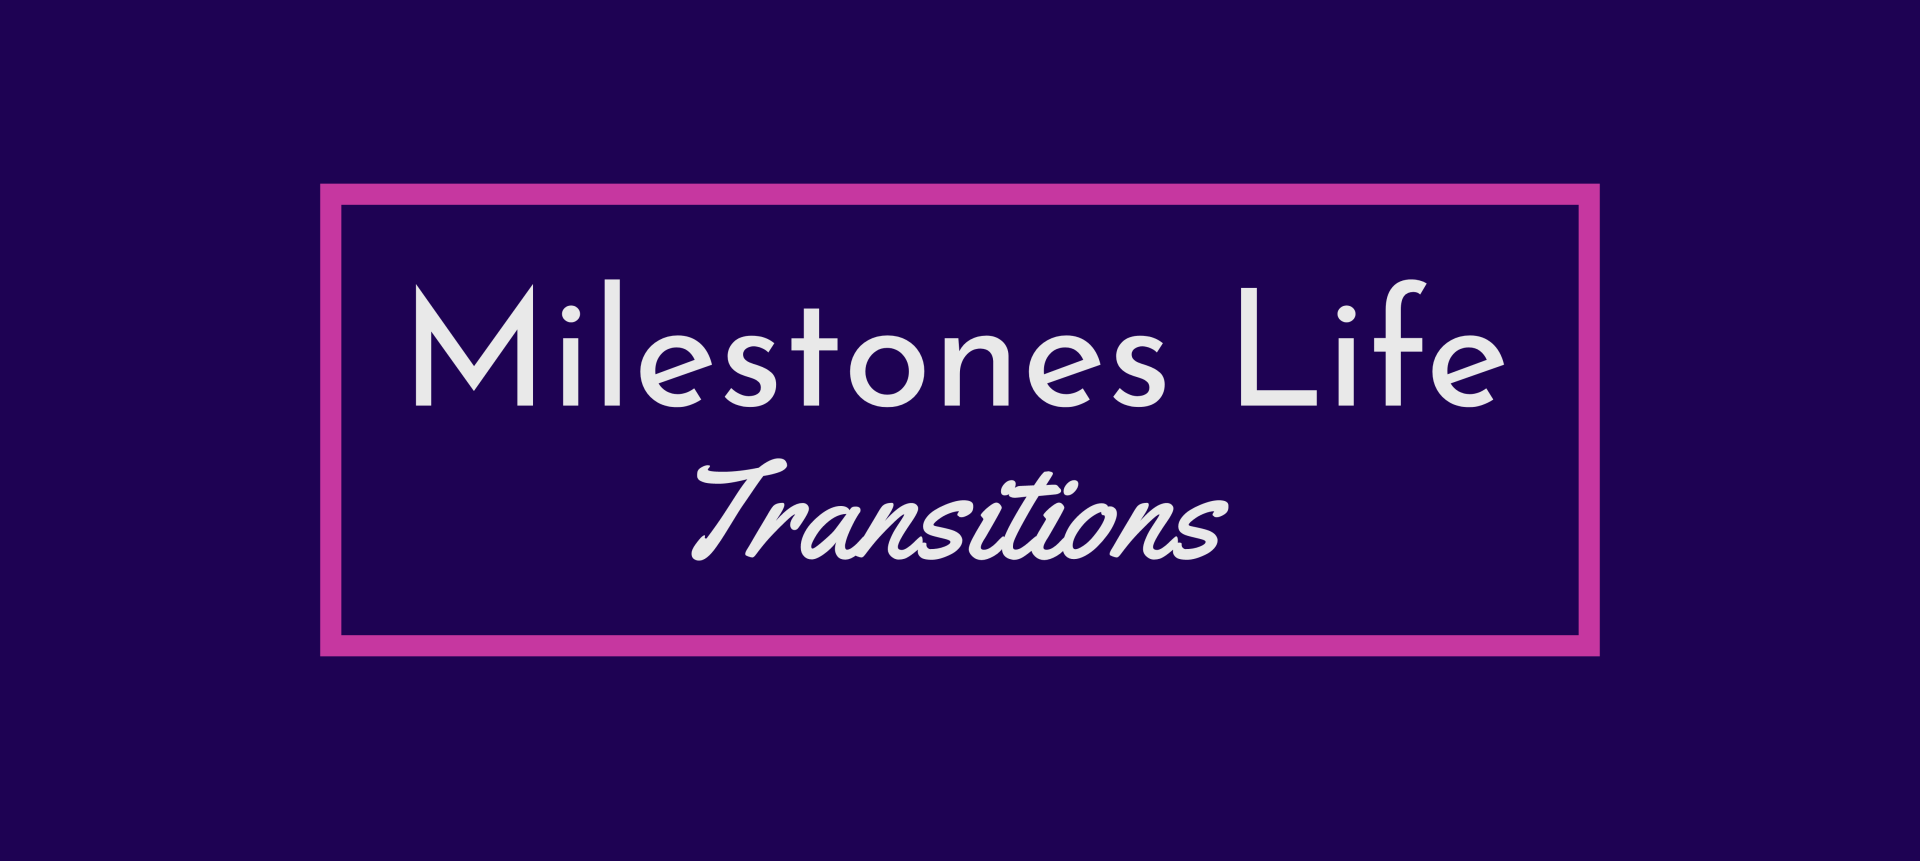 Milestones Life Transitions